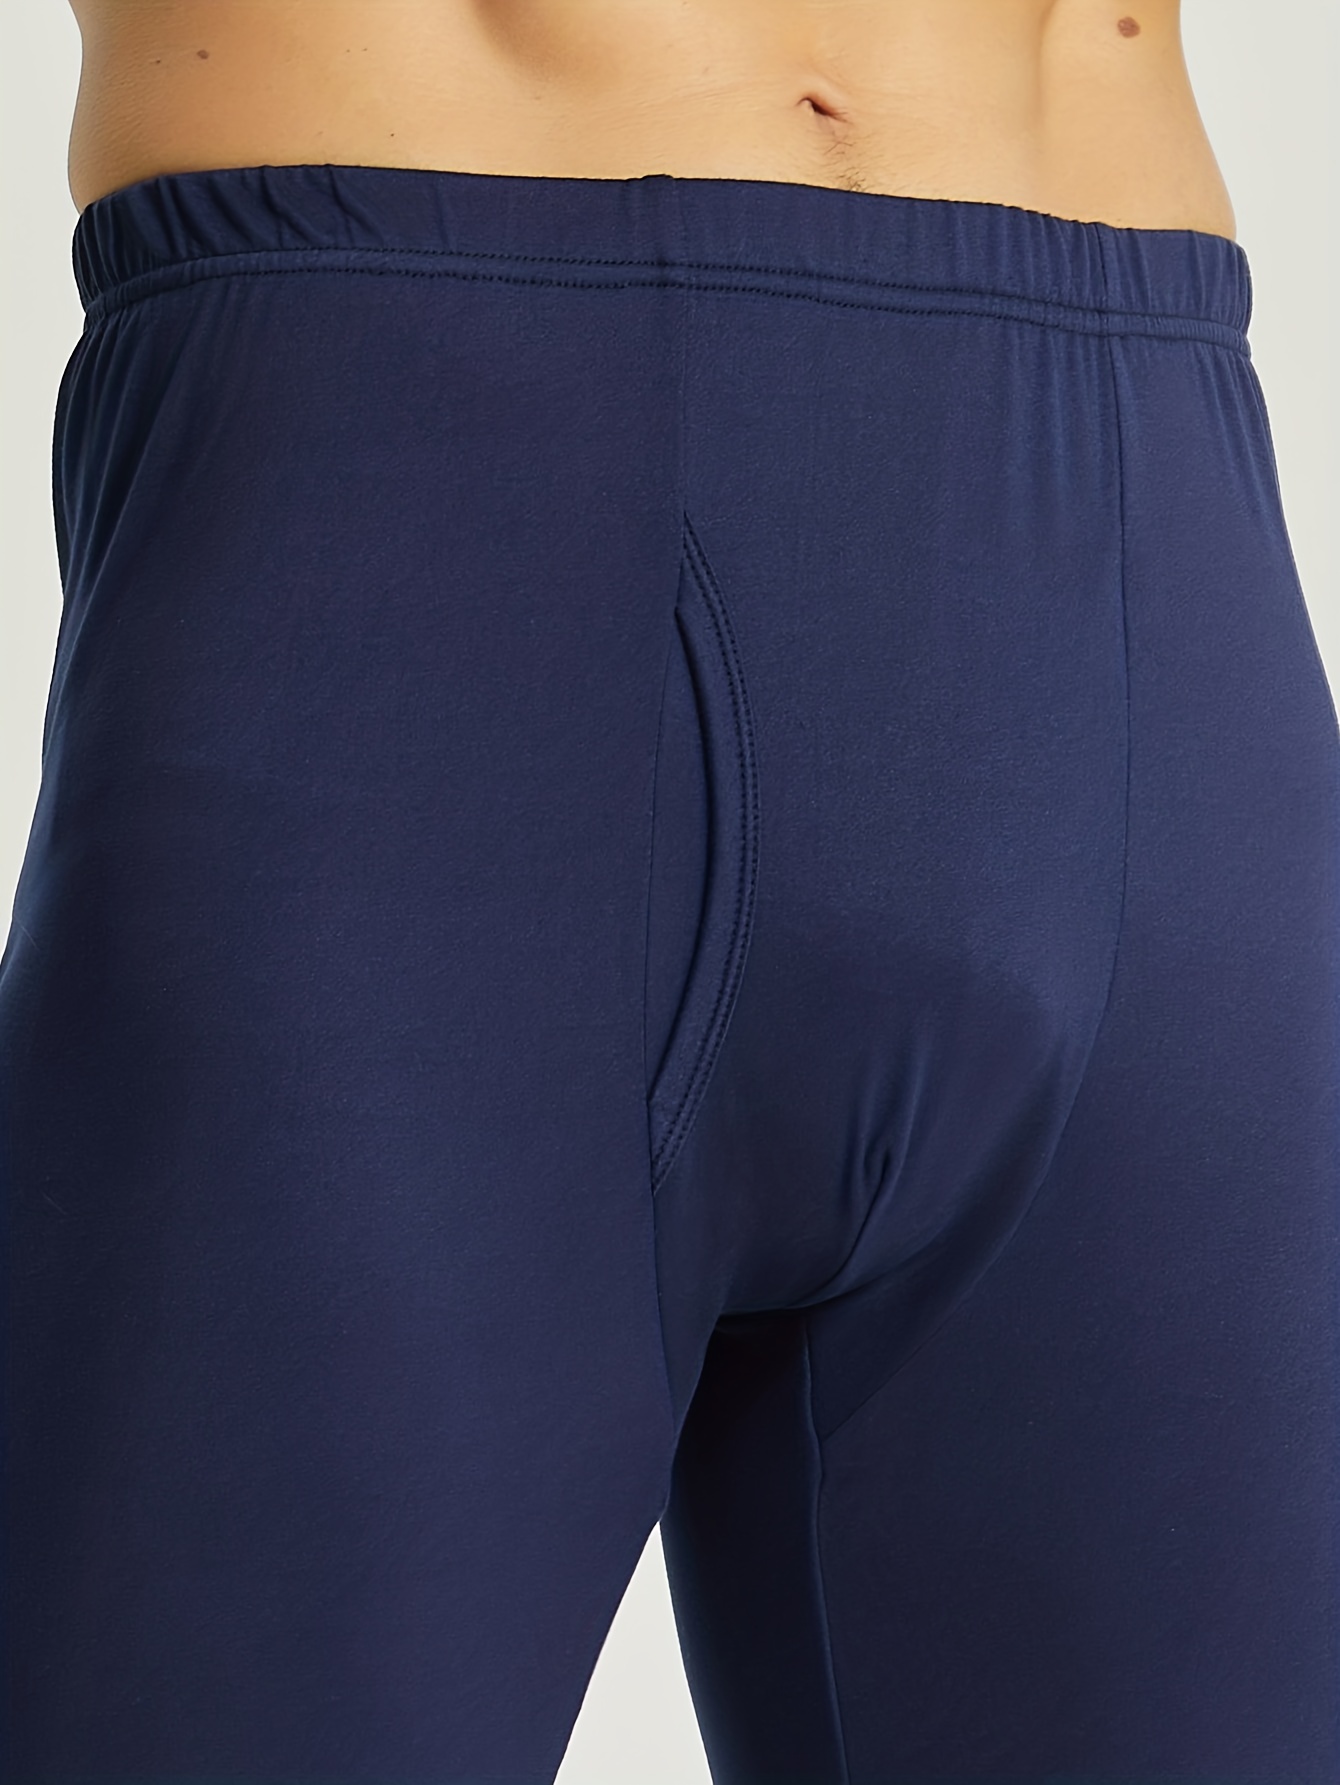 Cutecrop 3 Pack Men's Thermal Underwear Pants Fleece Lined Thermal Pant Thermal  Leggings for Men Base Layer Bottoms (Black, Gray,Medium) at  Men's  Clothing store